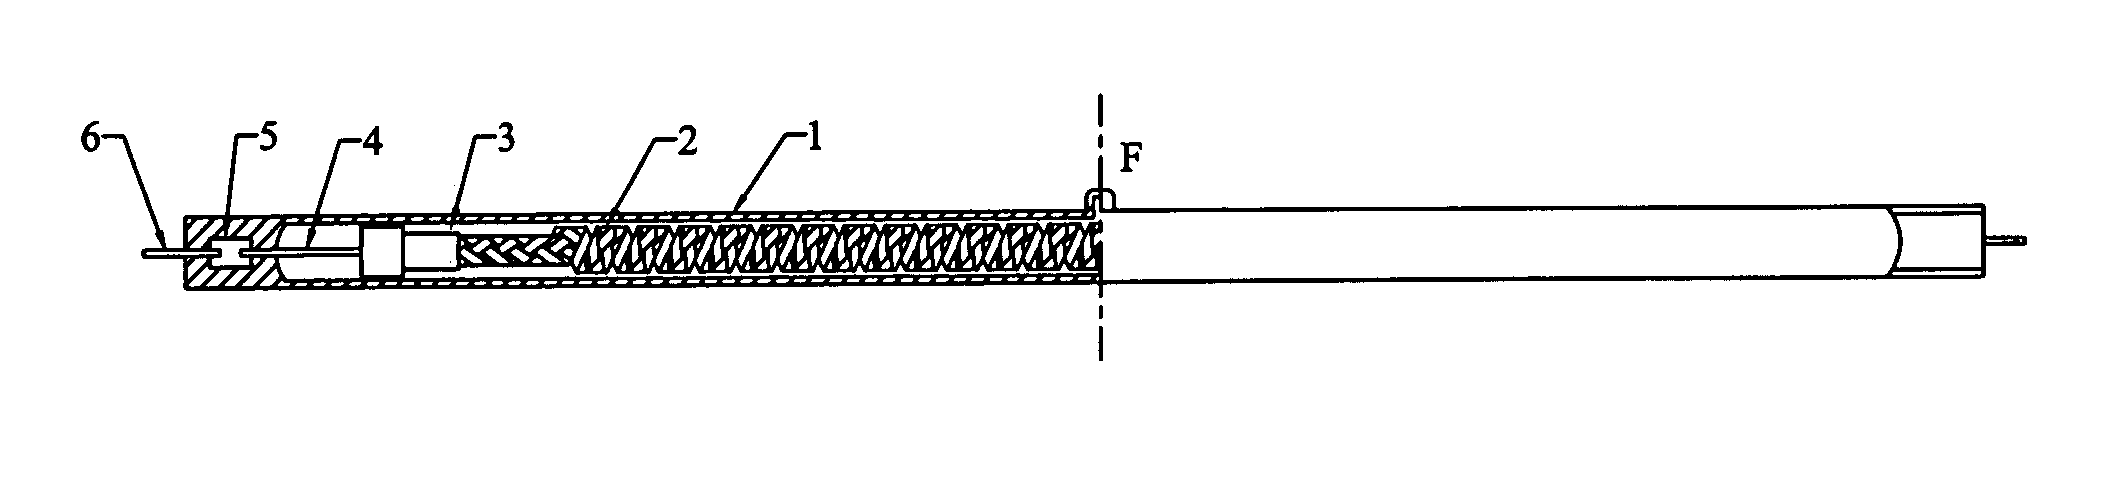 Spiral carbon fiber filament weaving belt electric heating element